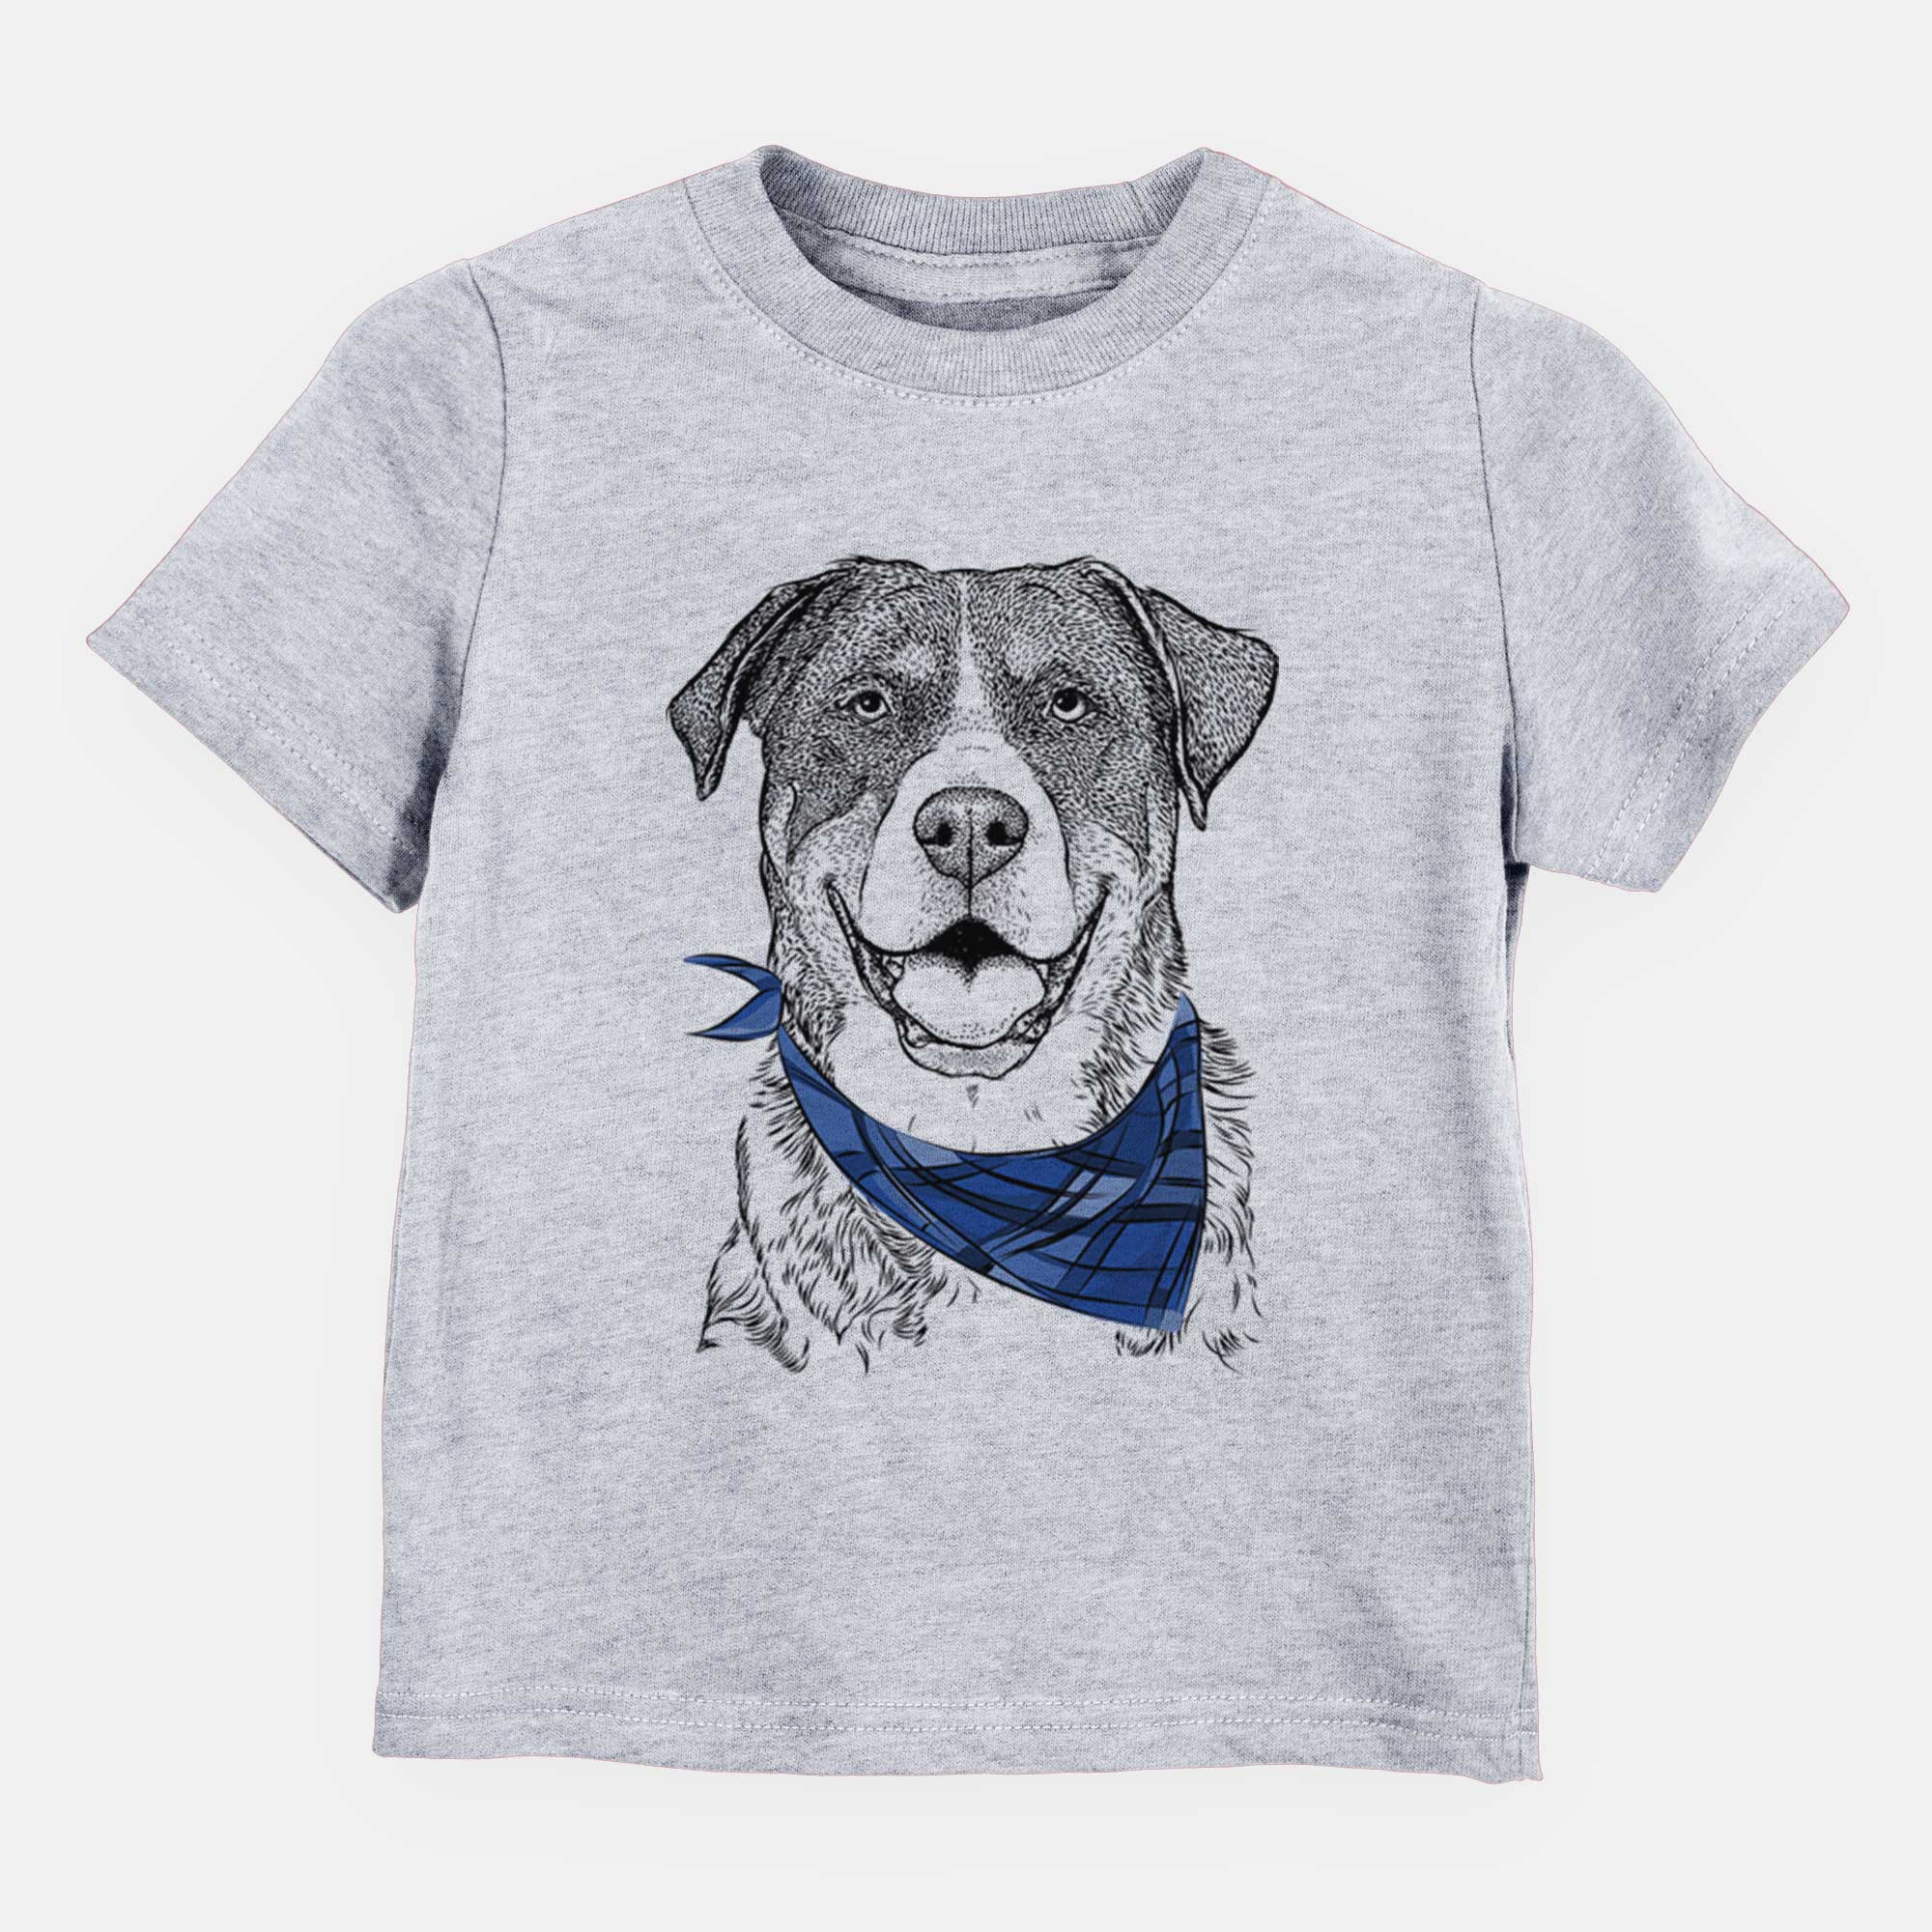 Bandana Leon the Greater Swiss Mountain Dog - Kids/Youth/Toddler Shirt